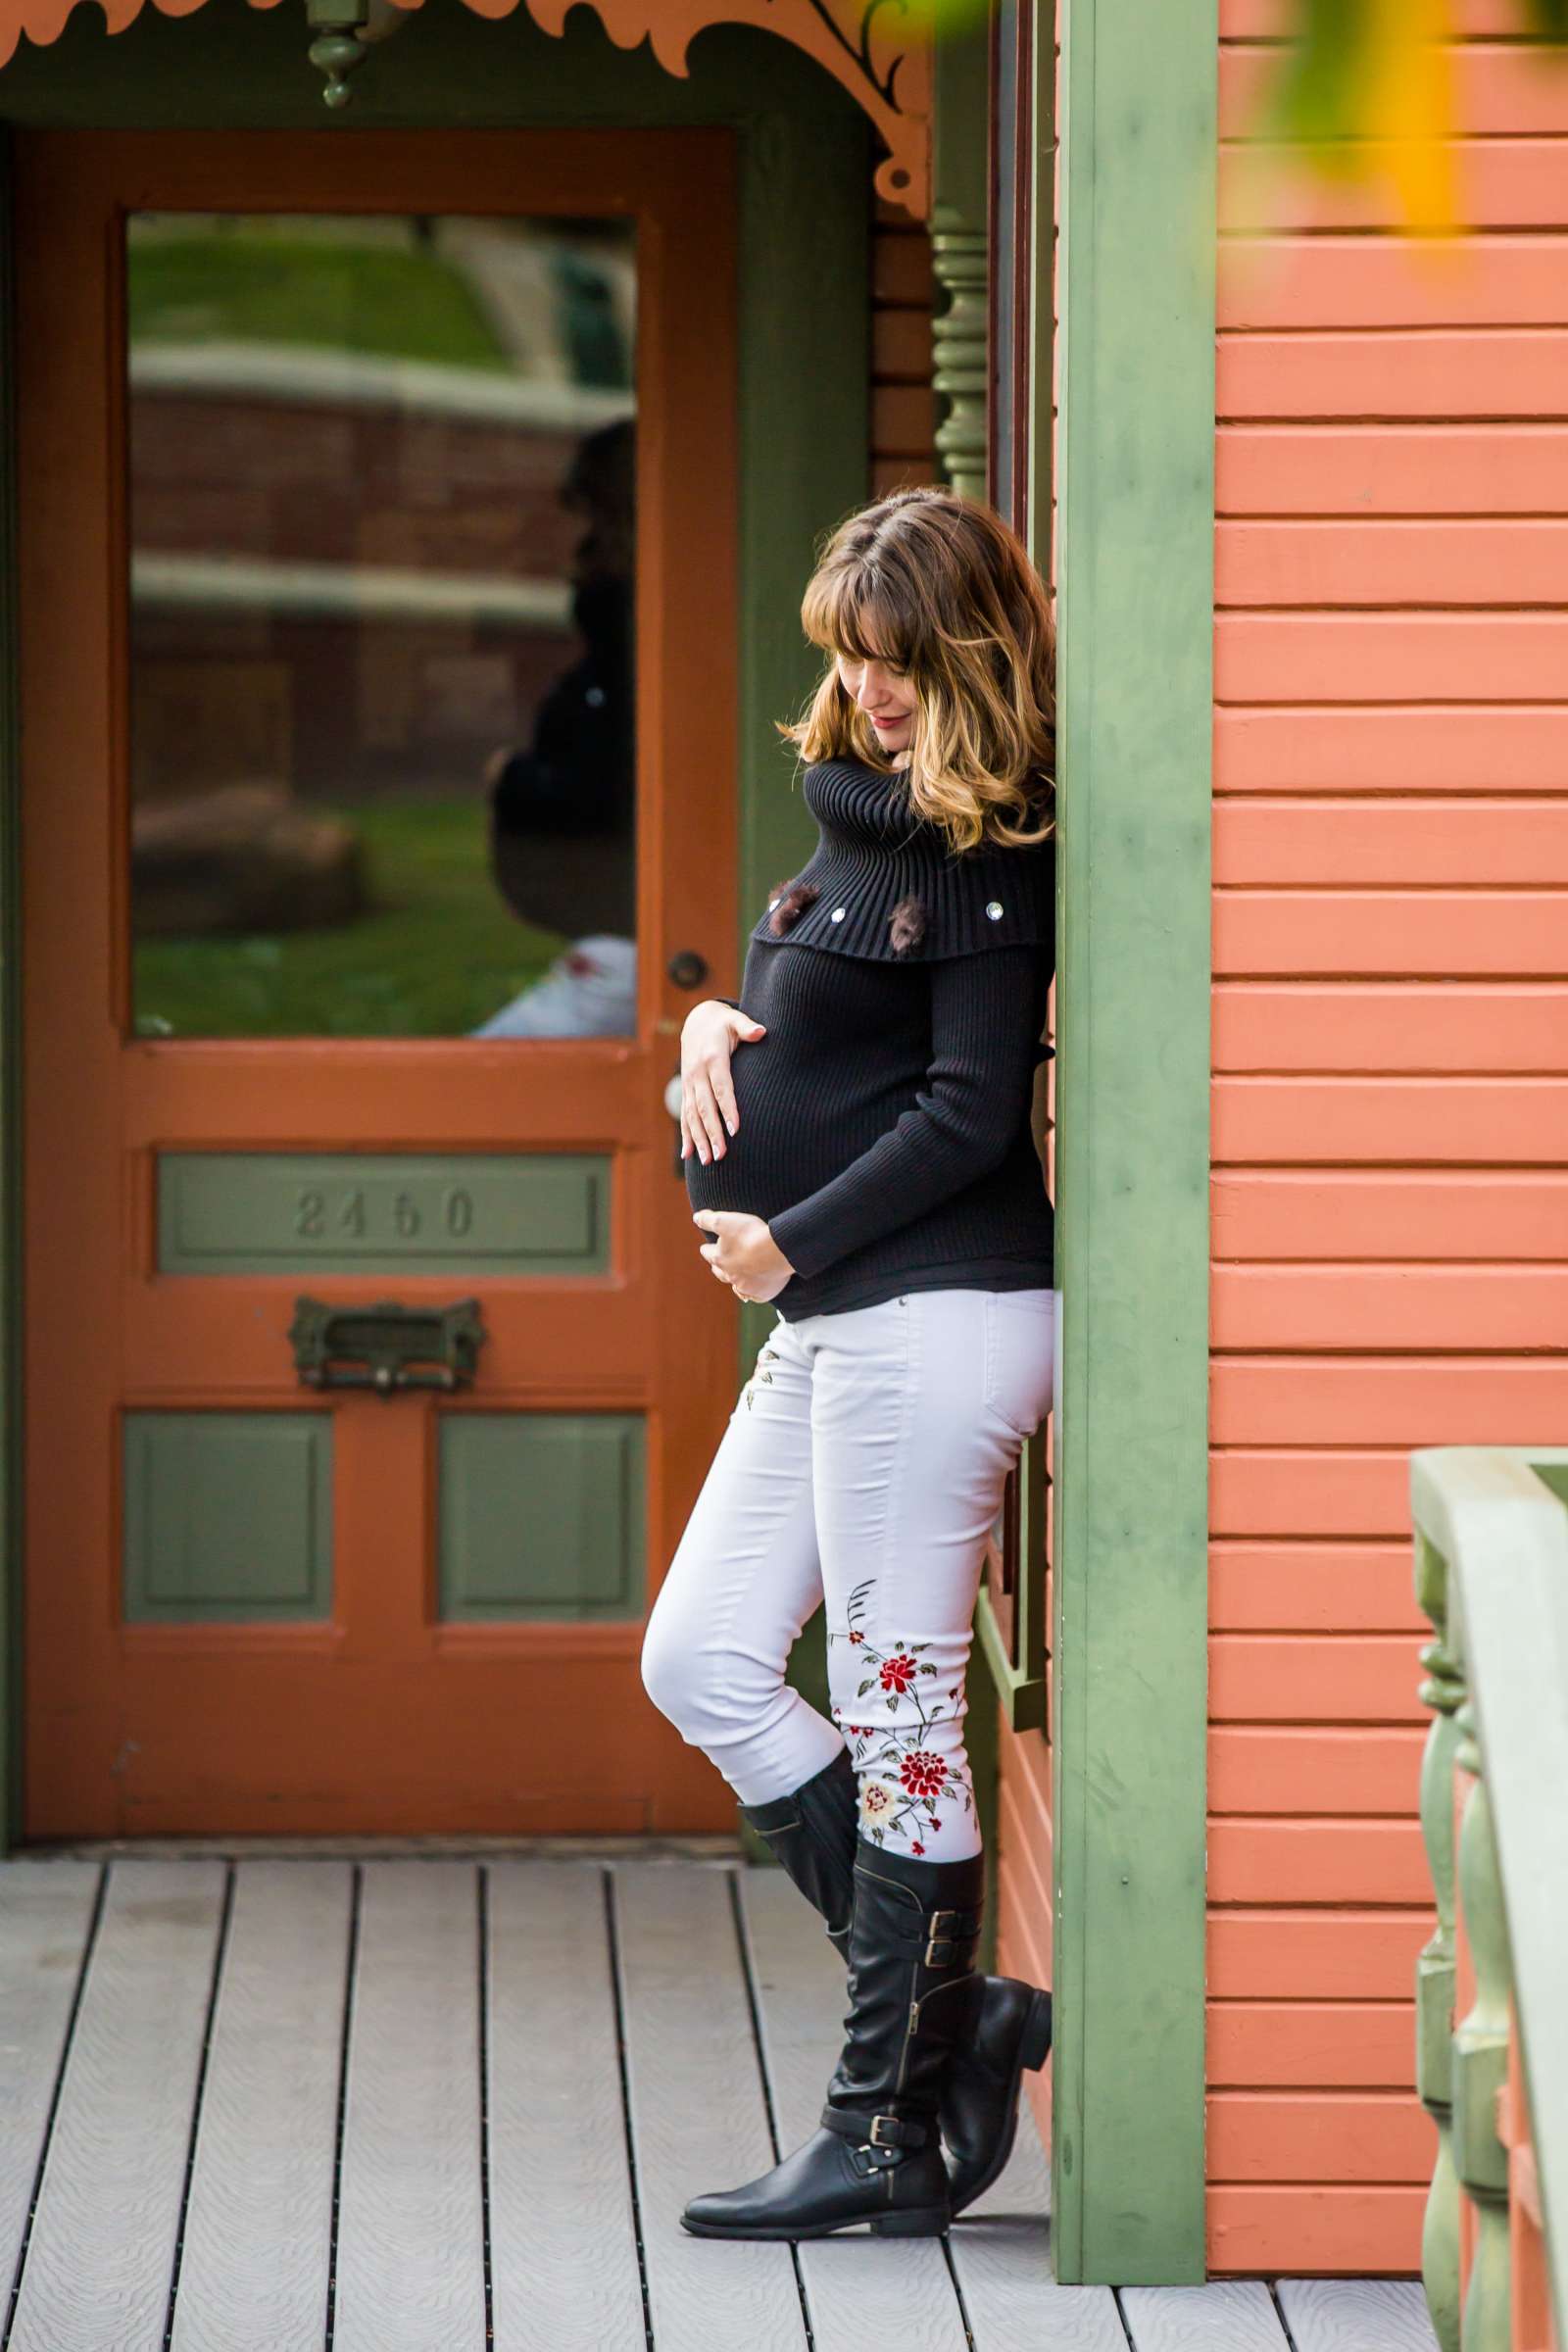 Heritage Park Maternity Photo Session, Yana Hart Maternity Photo #27 by True Photography